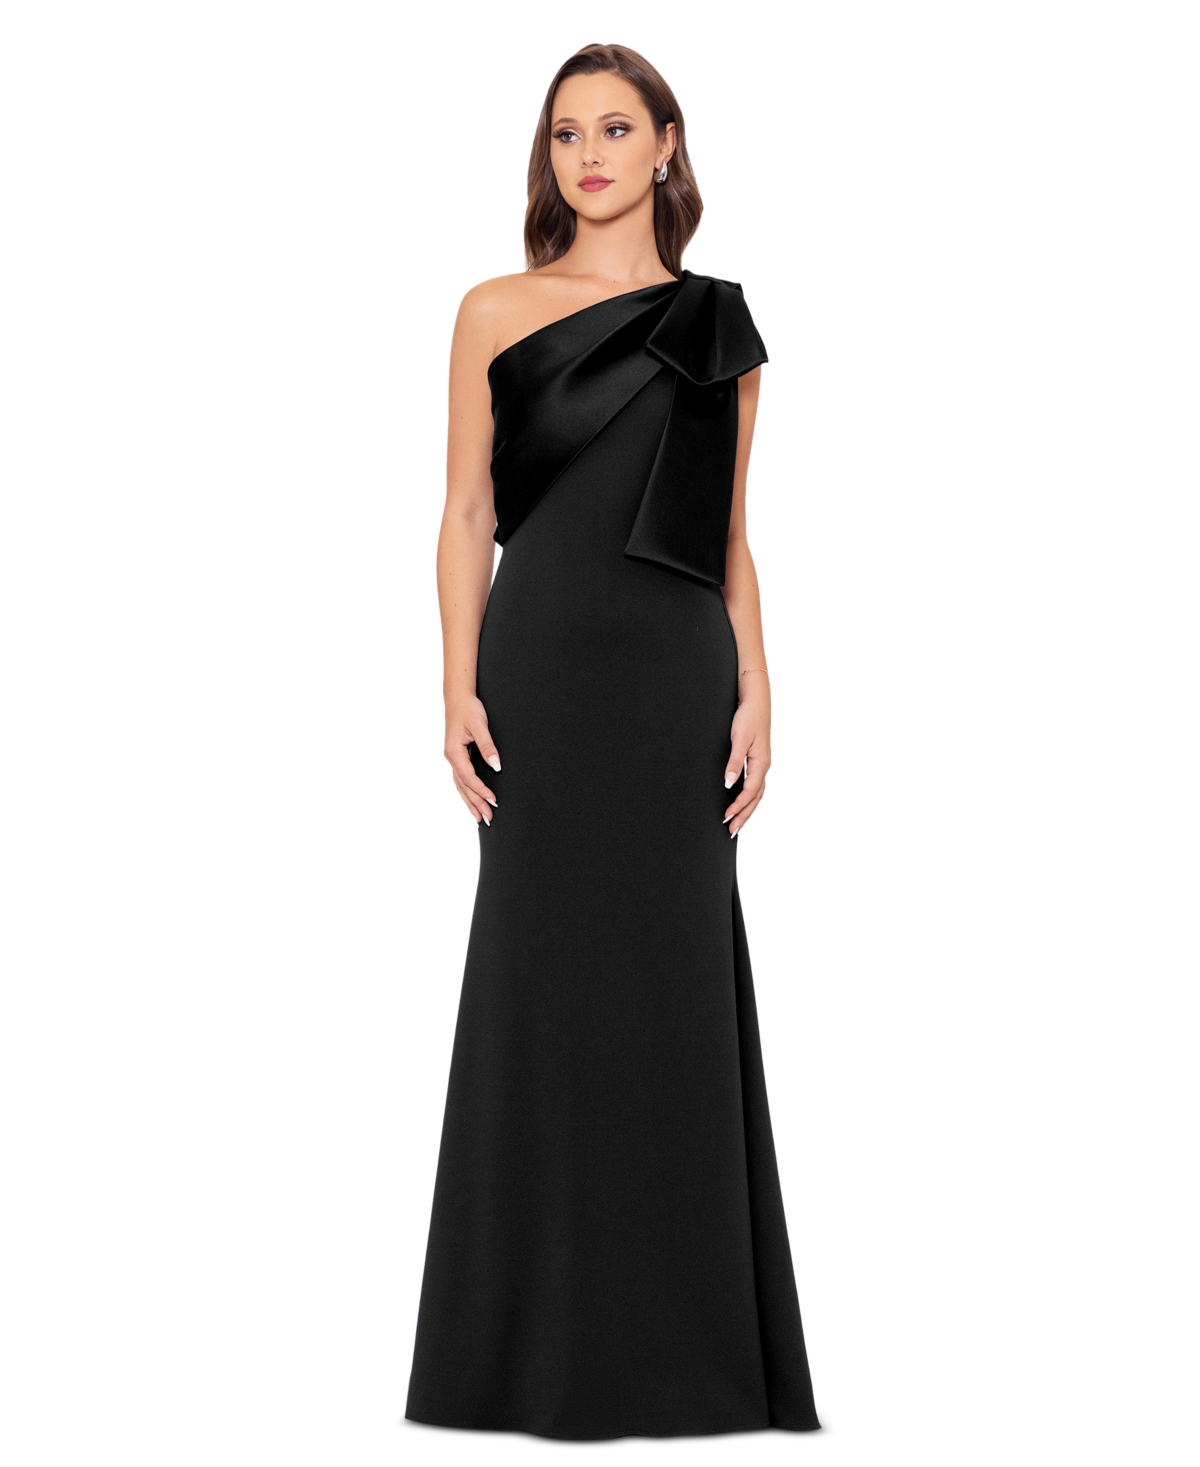 Women's Bow-Trim One-Shoulder Gown - Black